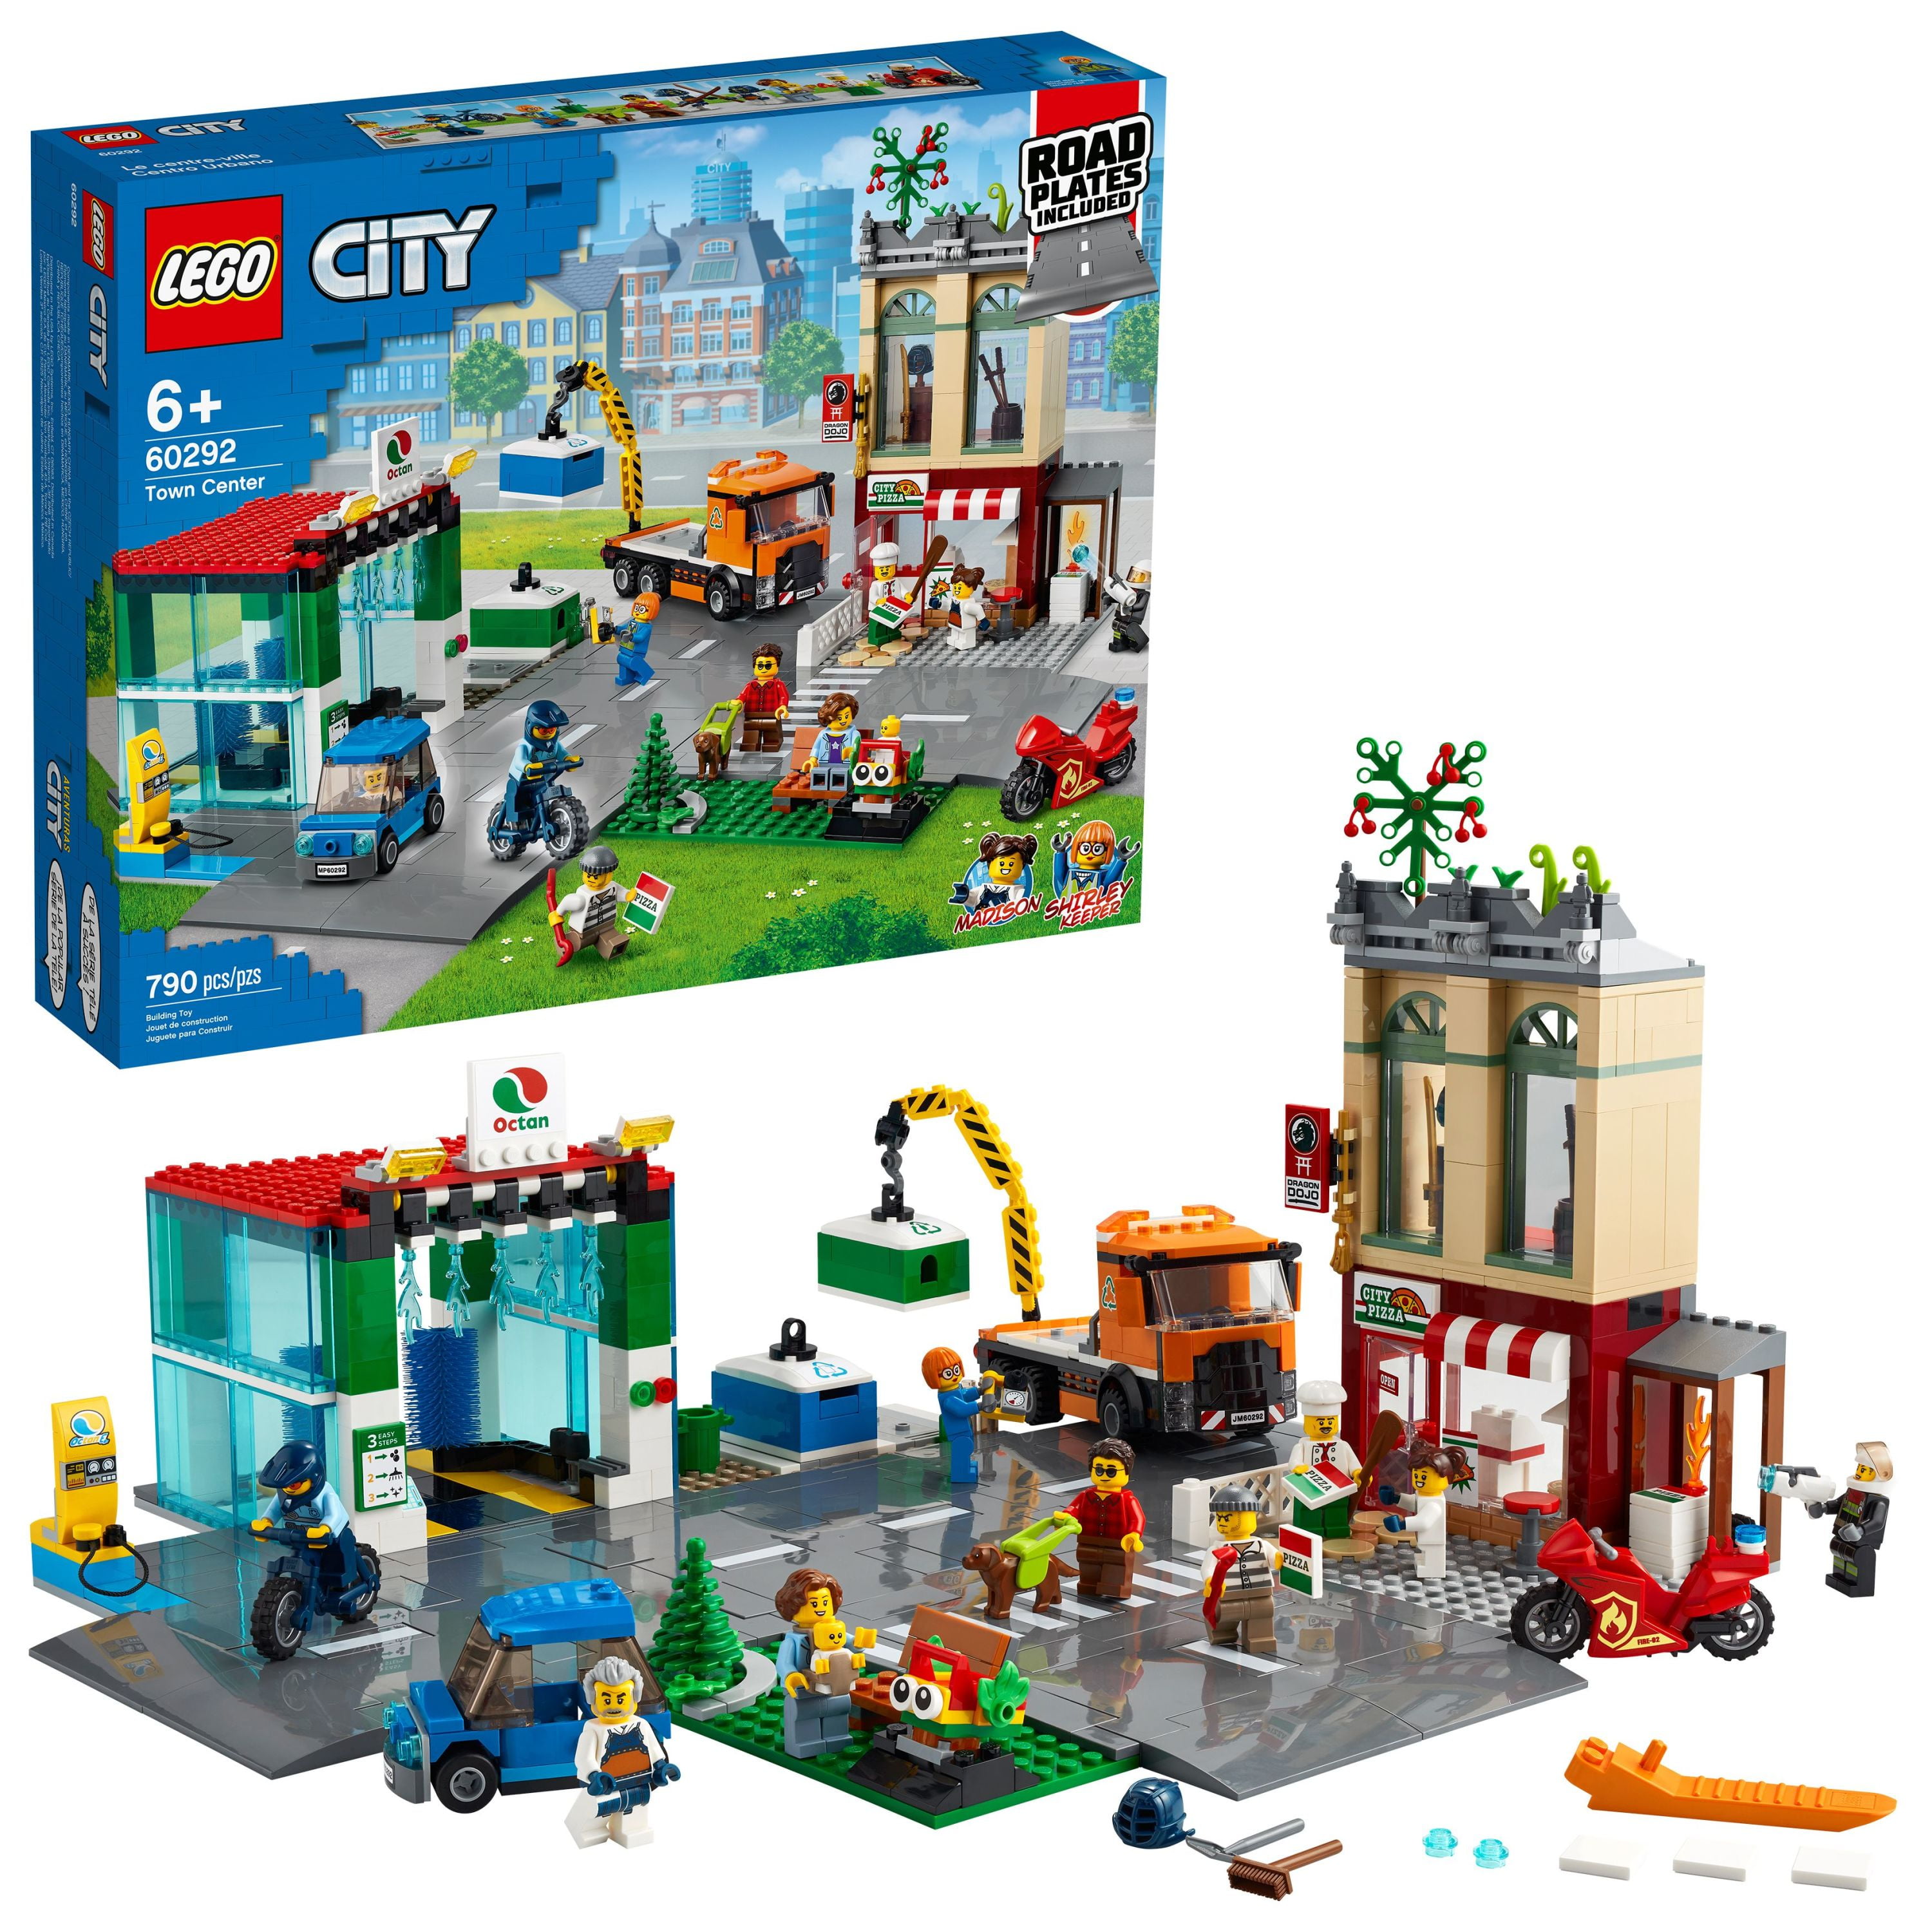 City Town Center 60292 Toy for Kids (790 Pieces) - Walmart.com